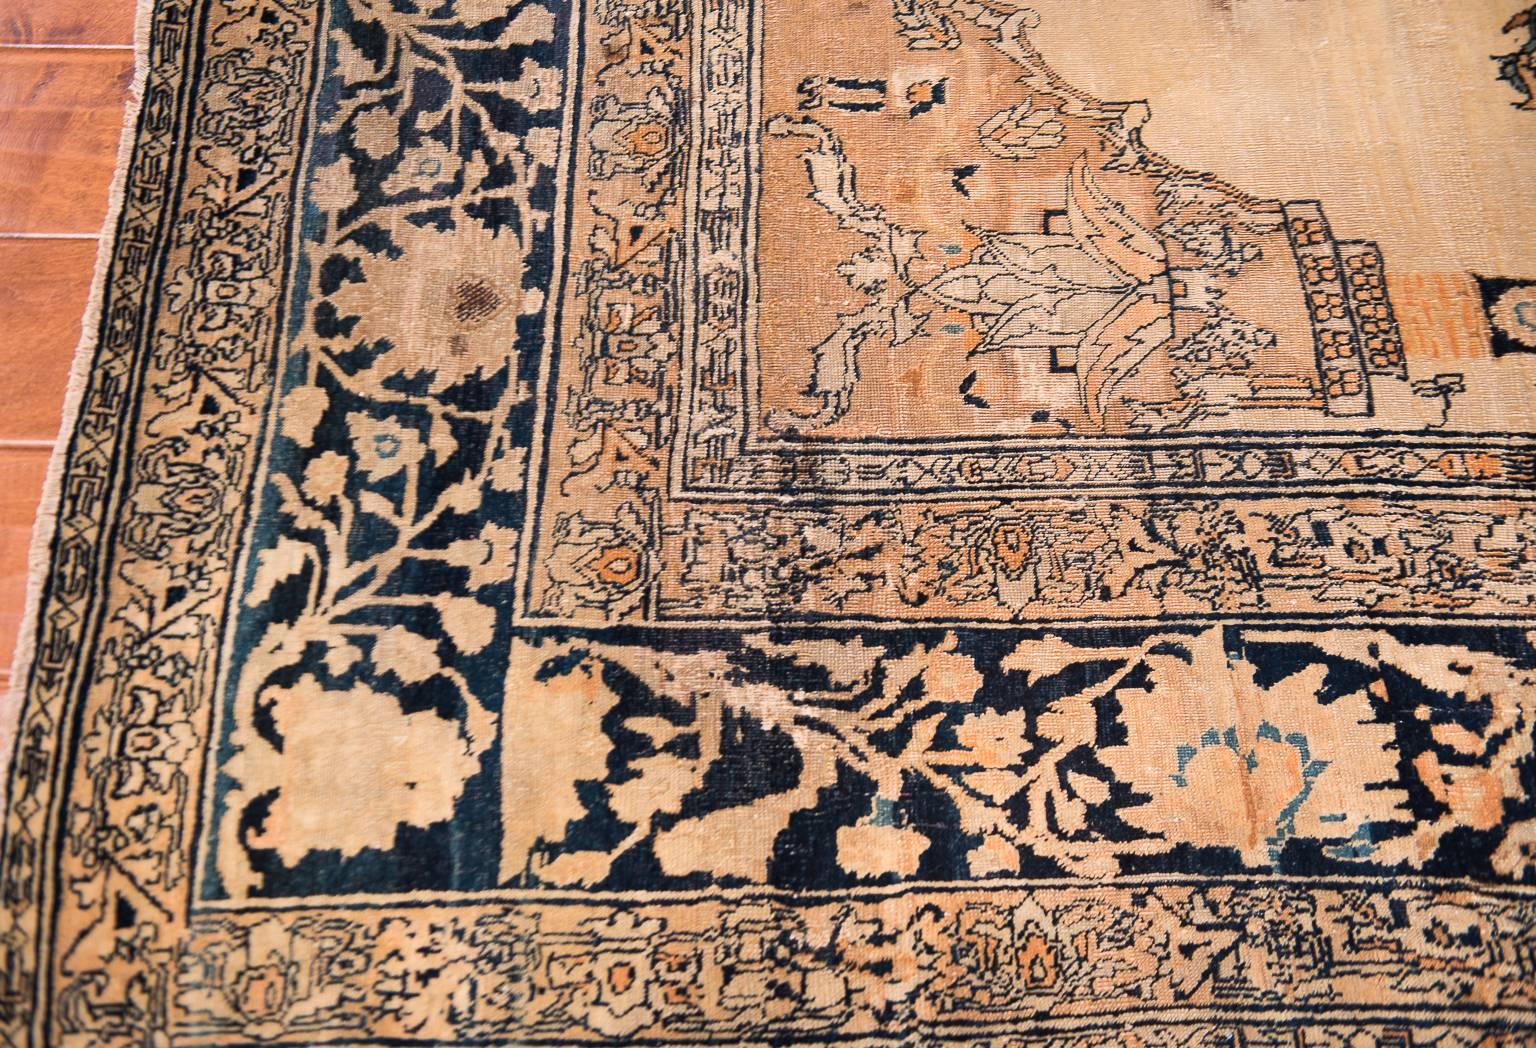 Late 19th Century 19th Century Persian Tabriz Prayer Rug For Sale